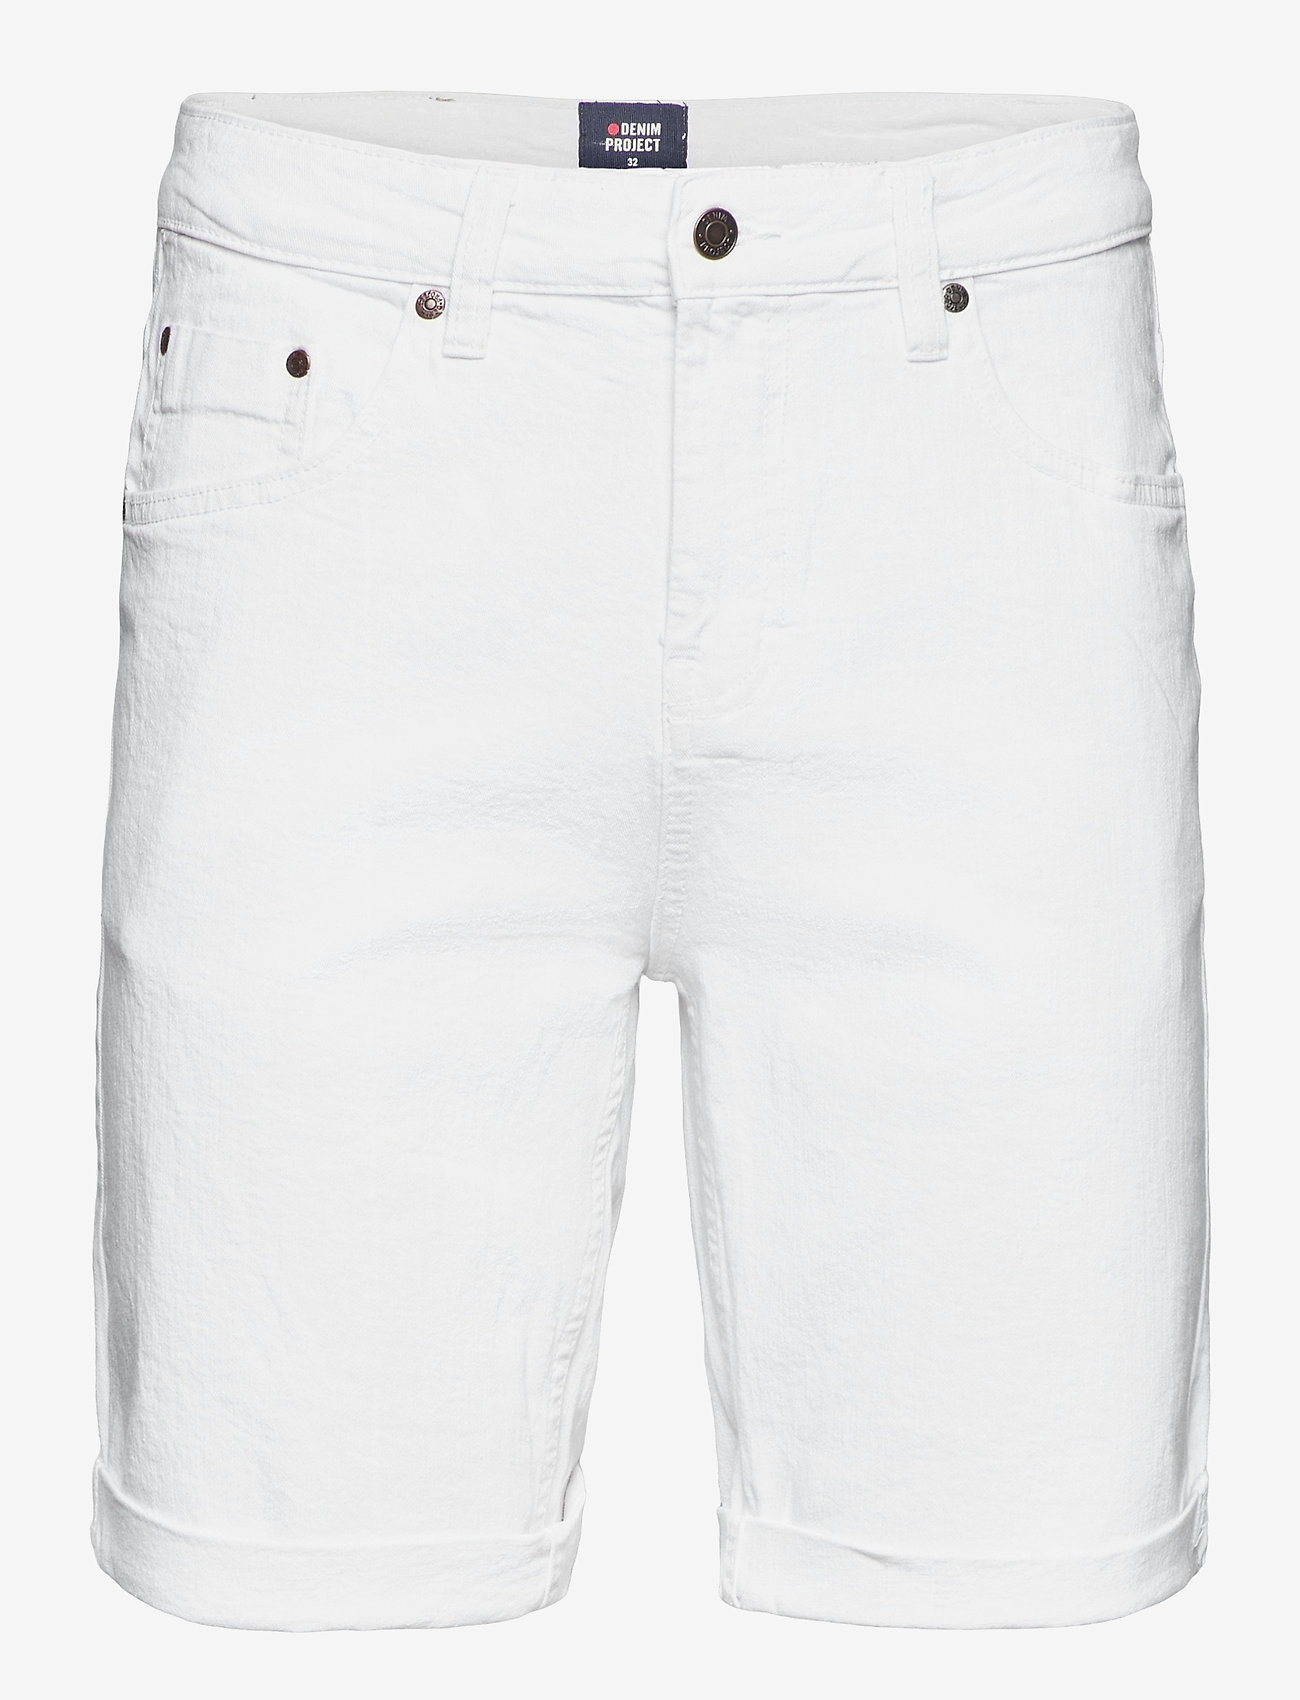 Denim project - Mr. Orange - denim shorts - 002 white - 0